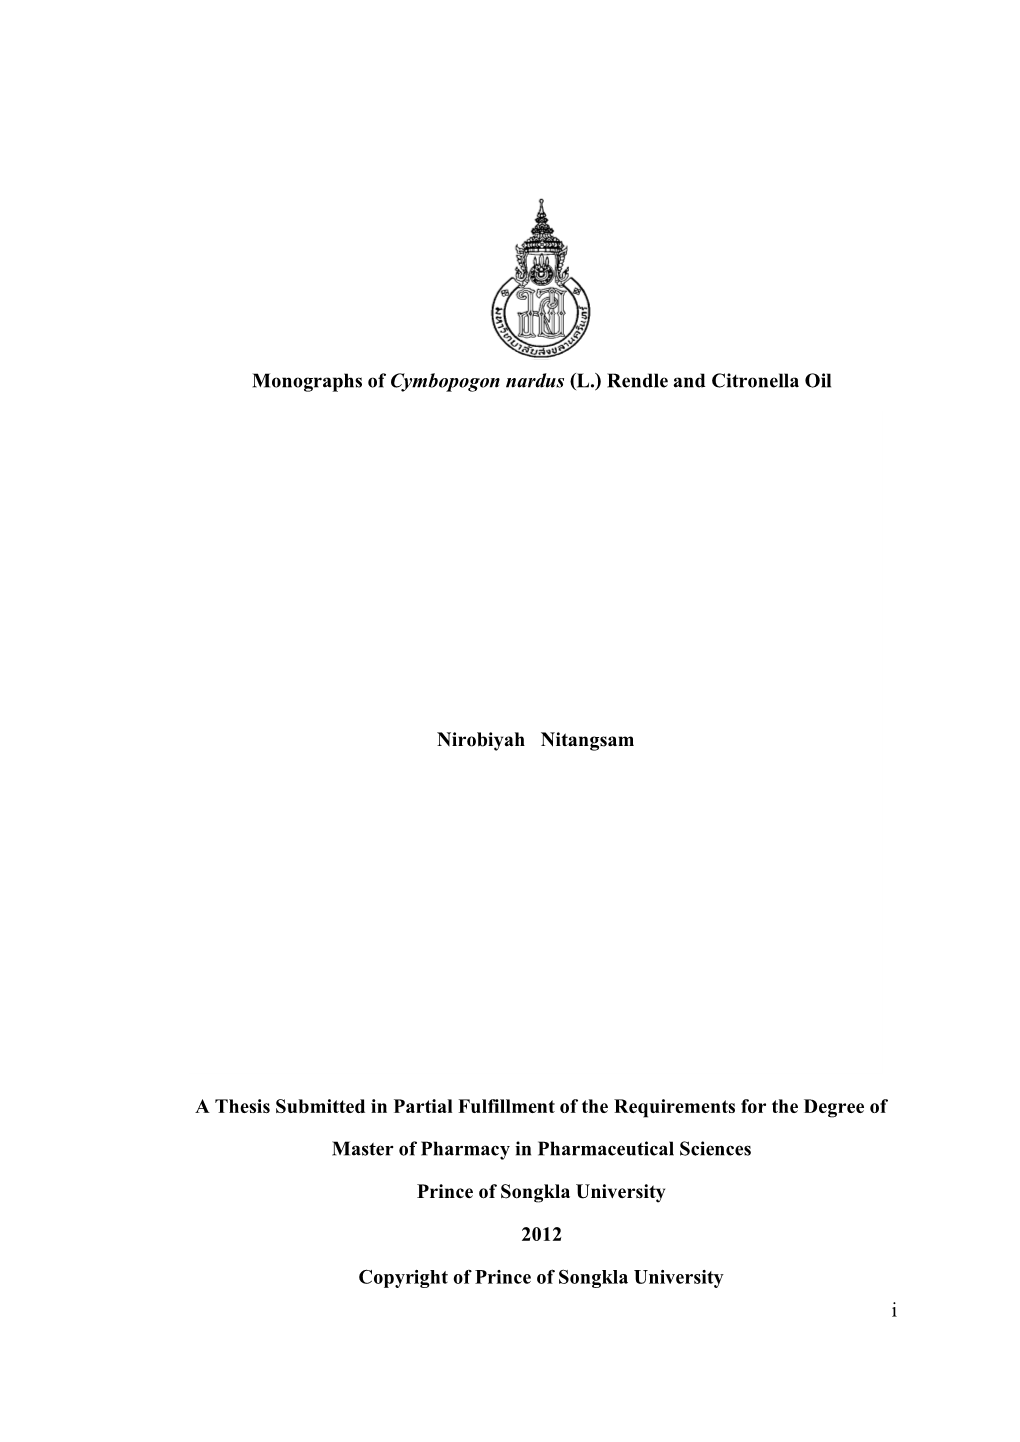 Monographs of Cymbopogon Nardus(L.) Rendle and Citronella